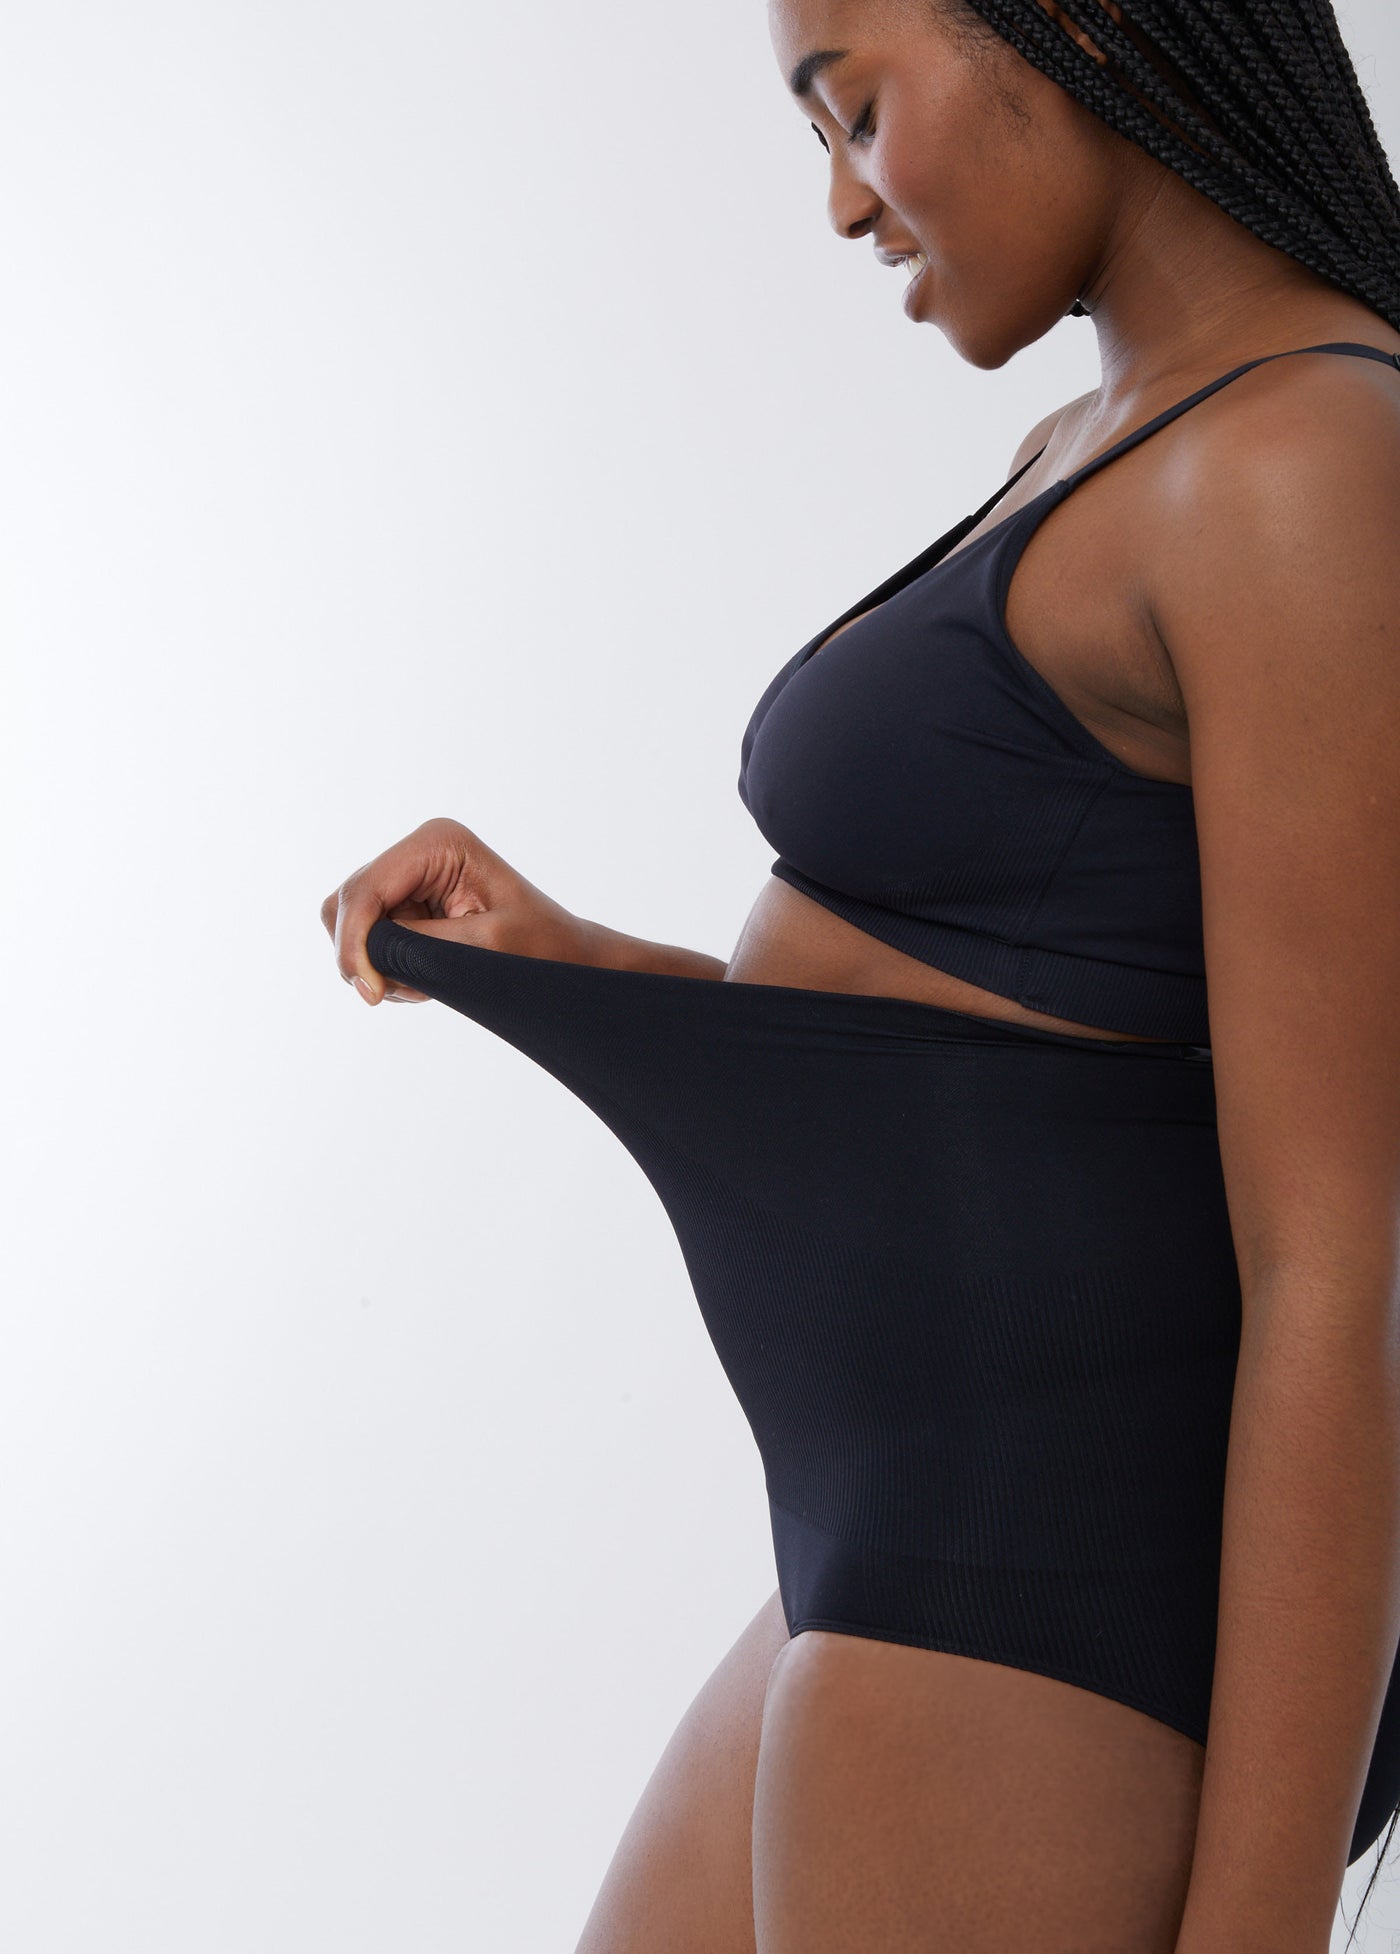 Are postpartum compression underwear worth it? #momlove #momtummy